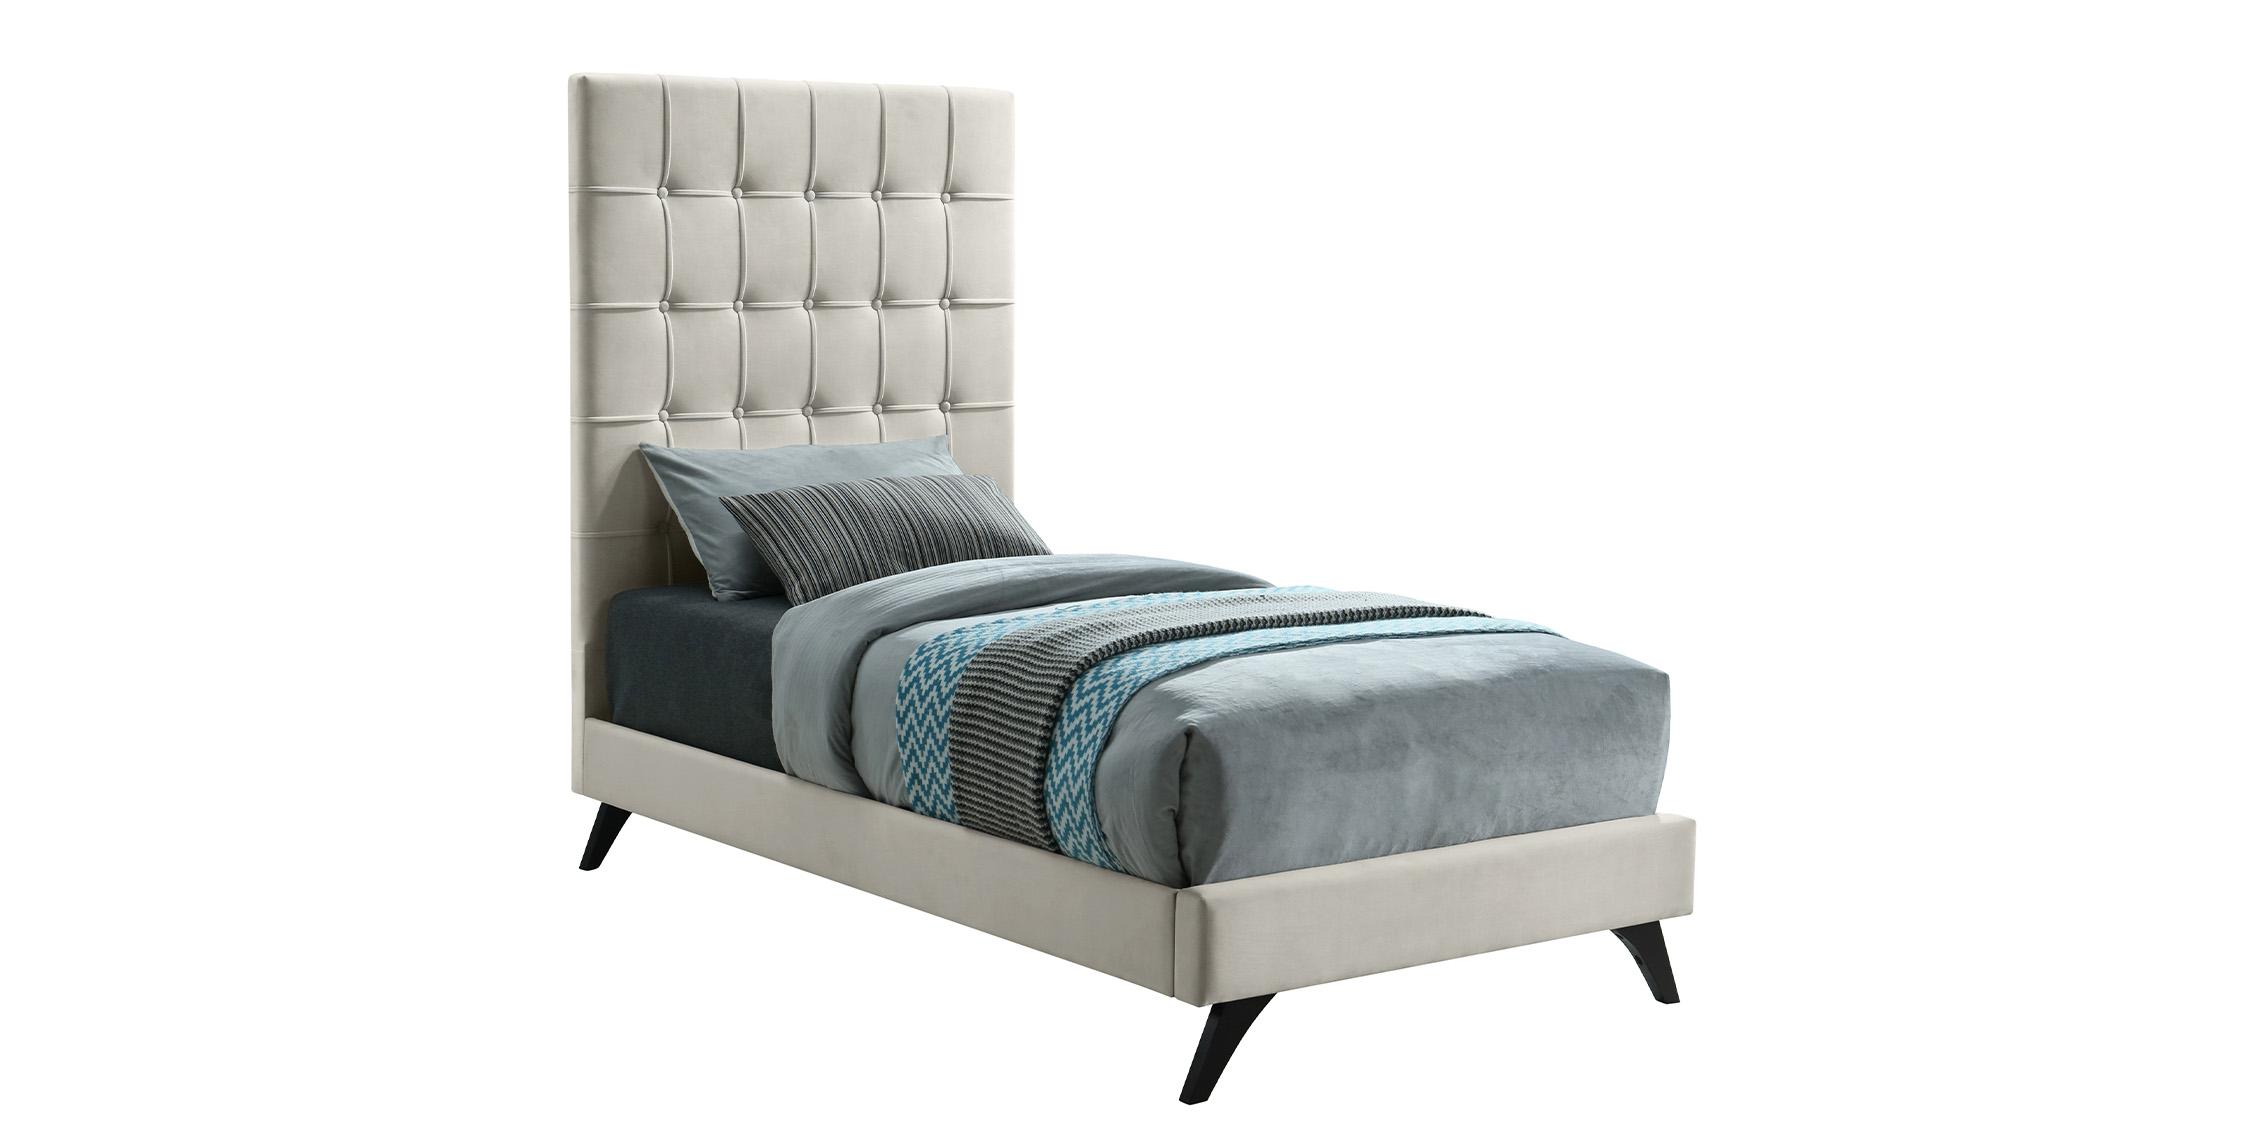 Contemporary, Modern Platform Bed ELLY EllyCream-T EllyCream-T in Cream, Espresso Fabric